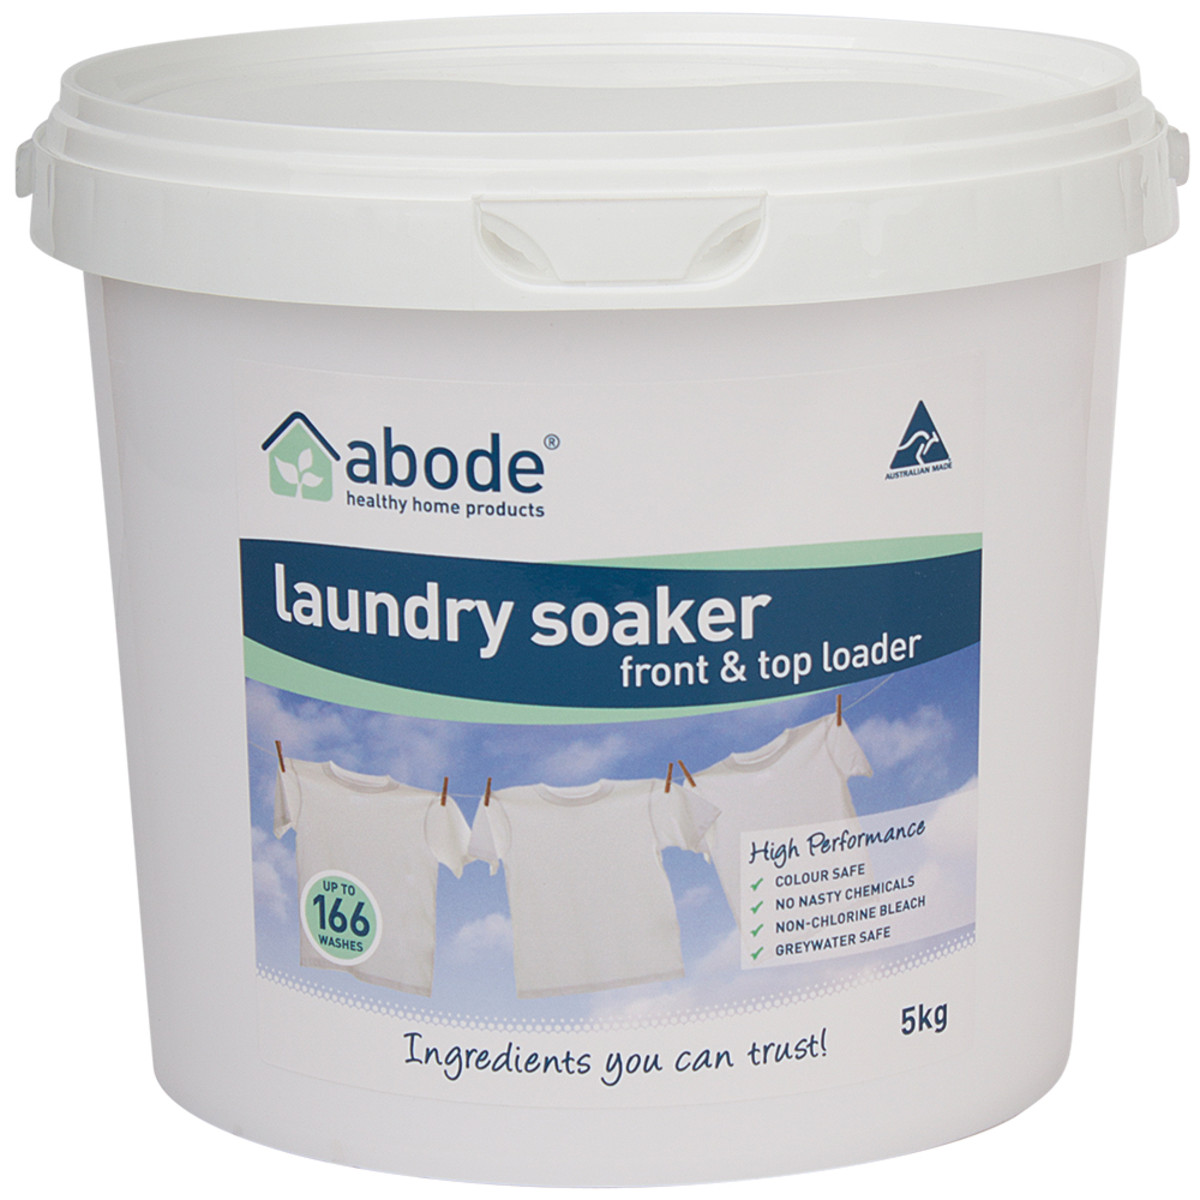 ABODE - Laundry Soaker (Front & Top Loader) High Performance 5kg Bucket